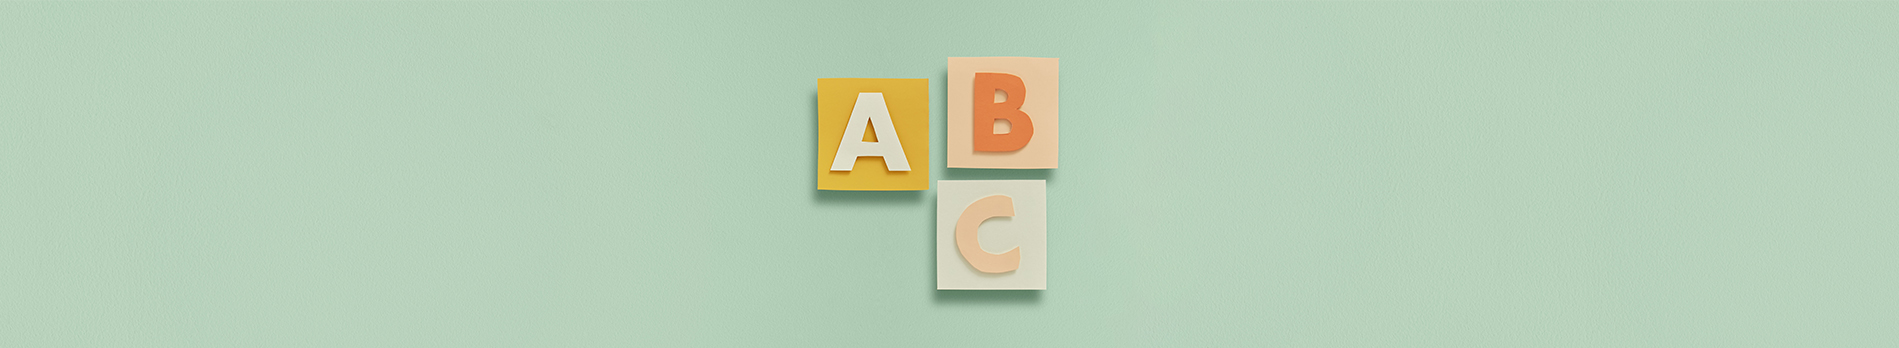 Paper cut alphabet blocks on a light green background